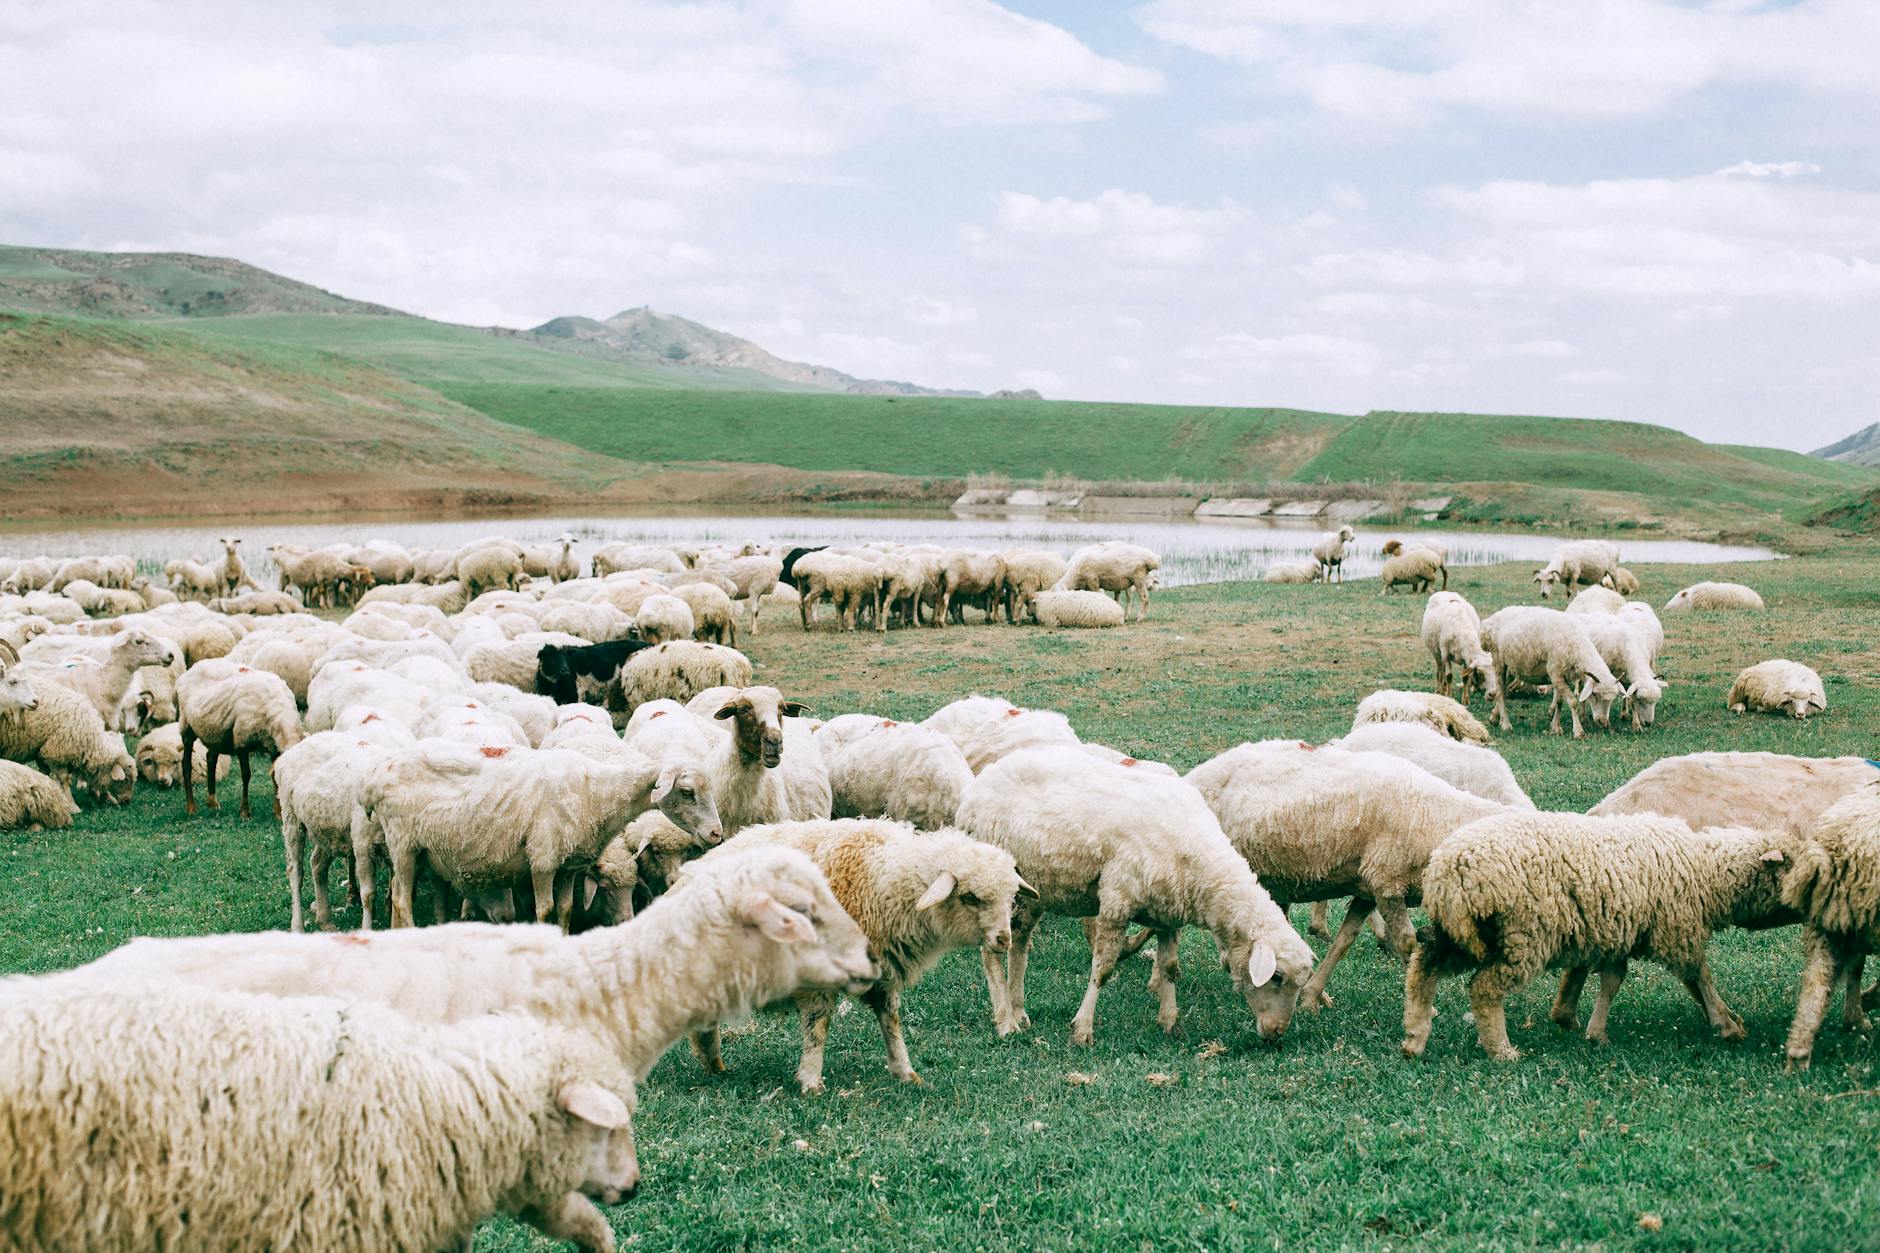 herd of sheep grazing on field